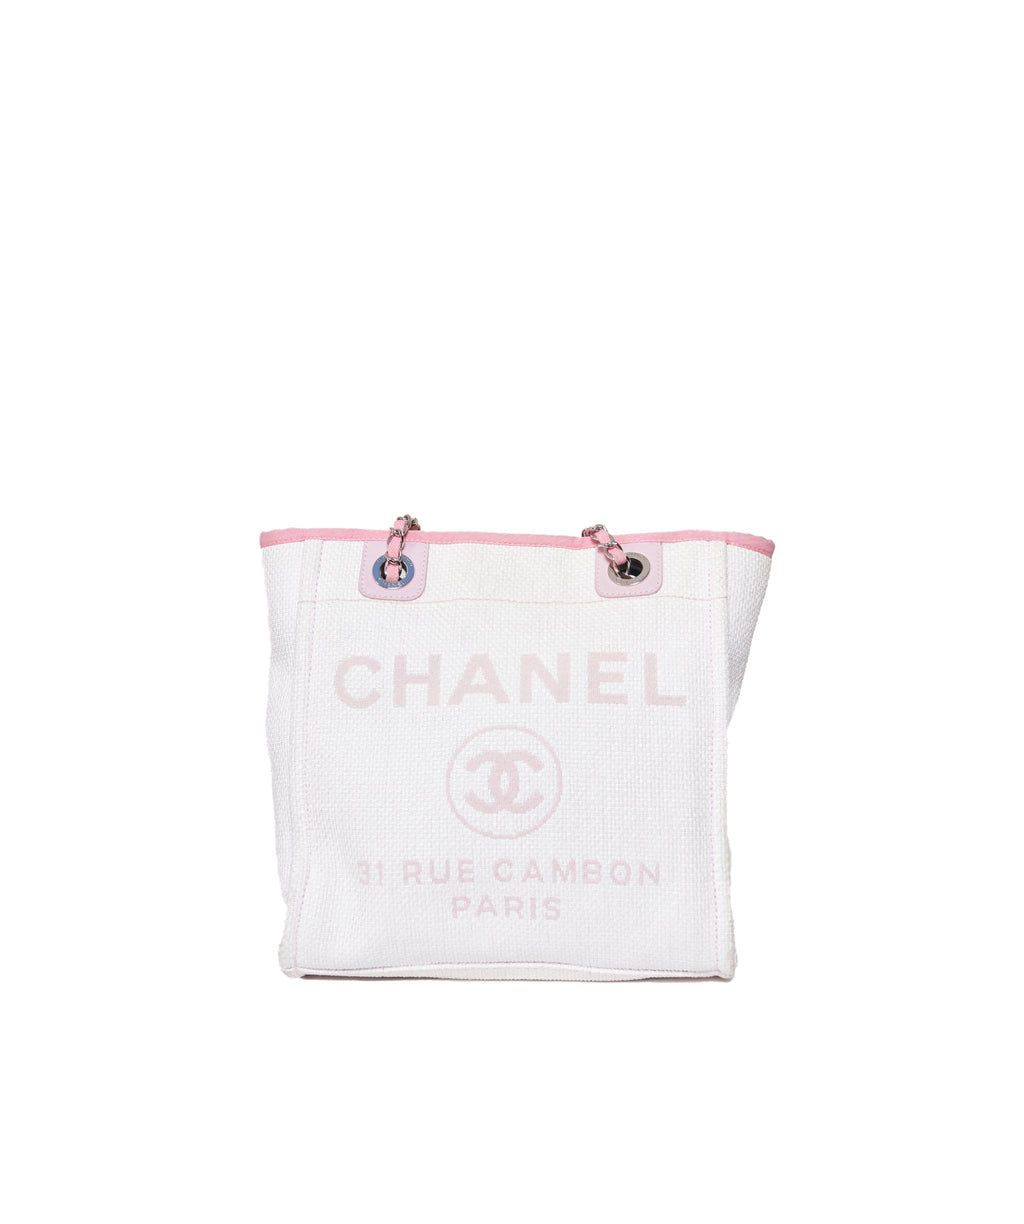 Chanel 22A Small Deauville Tote